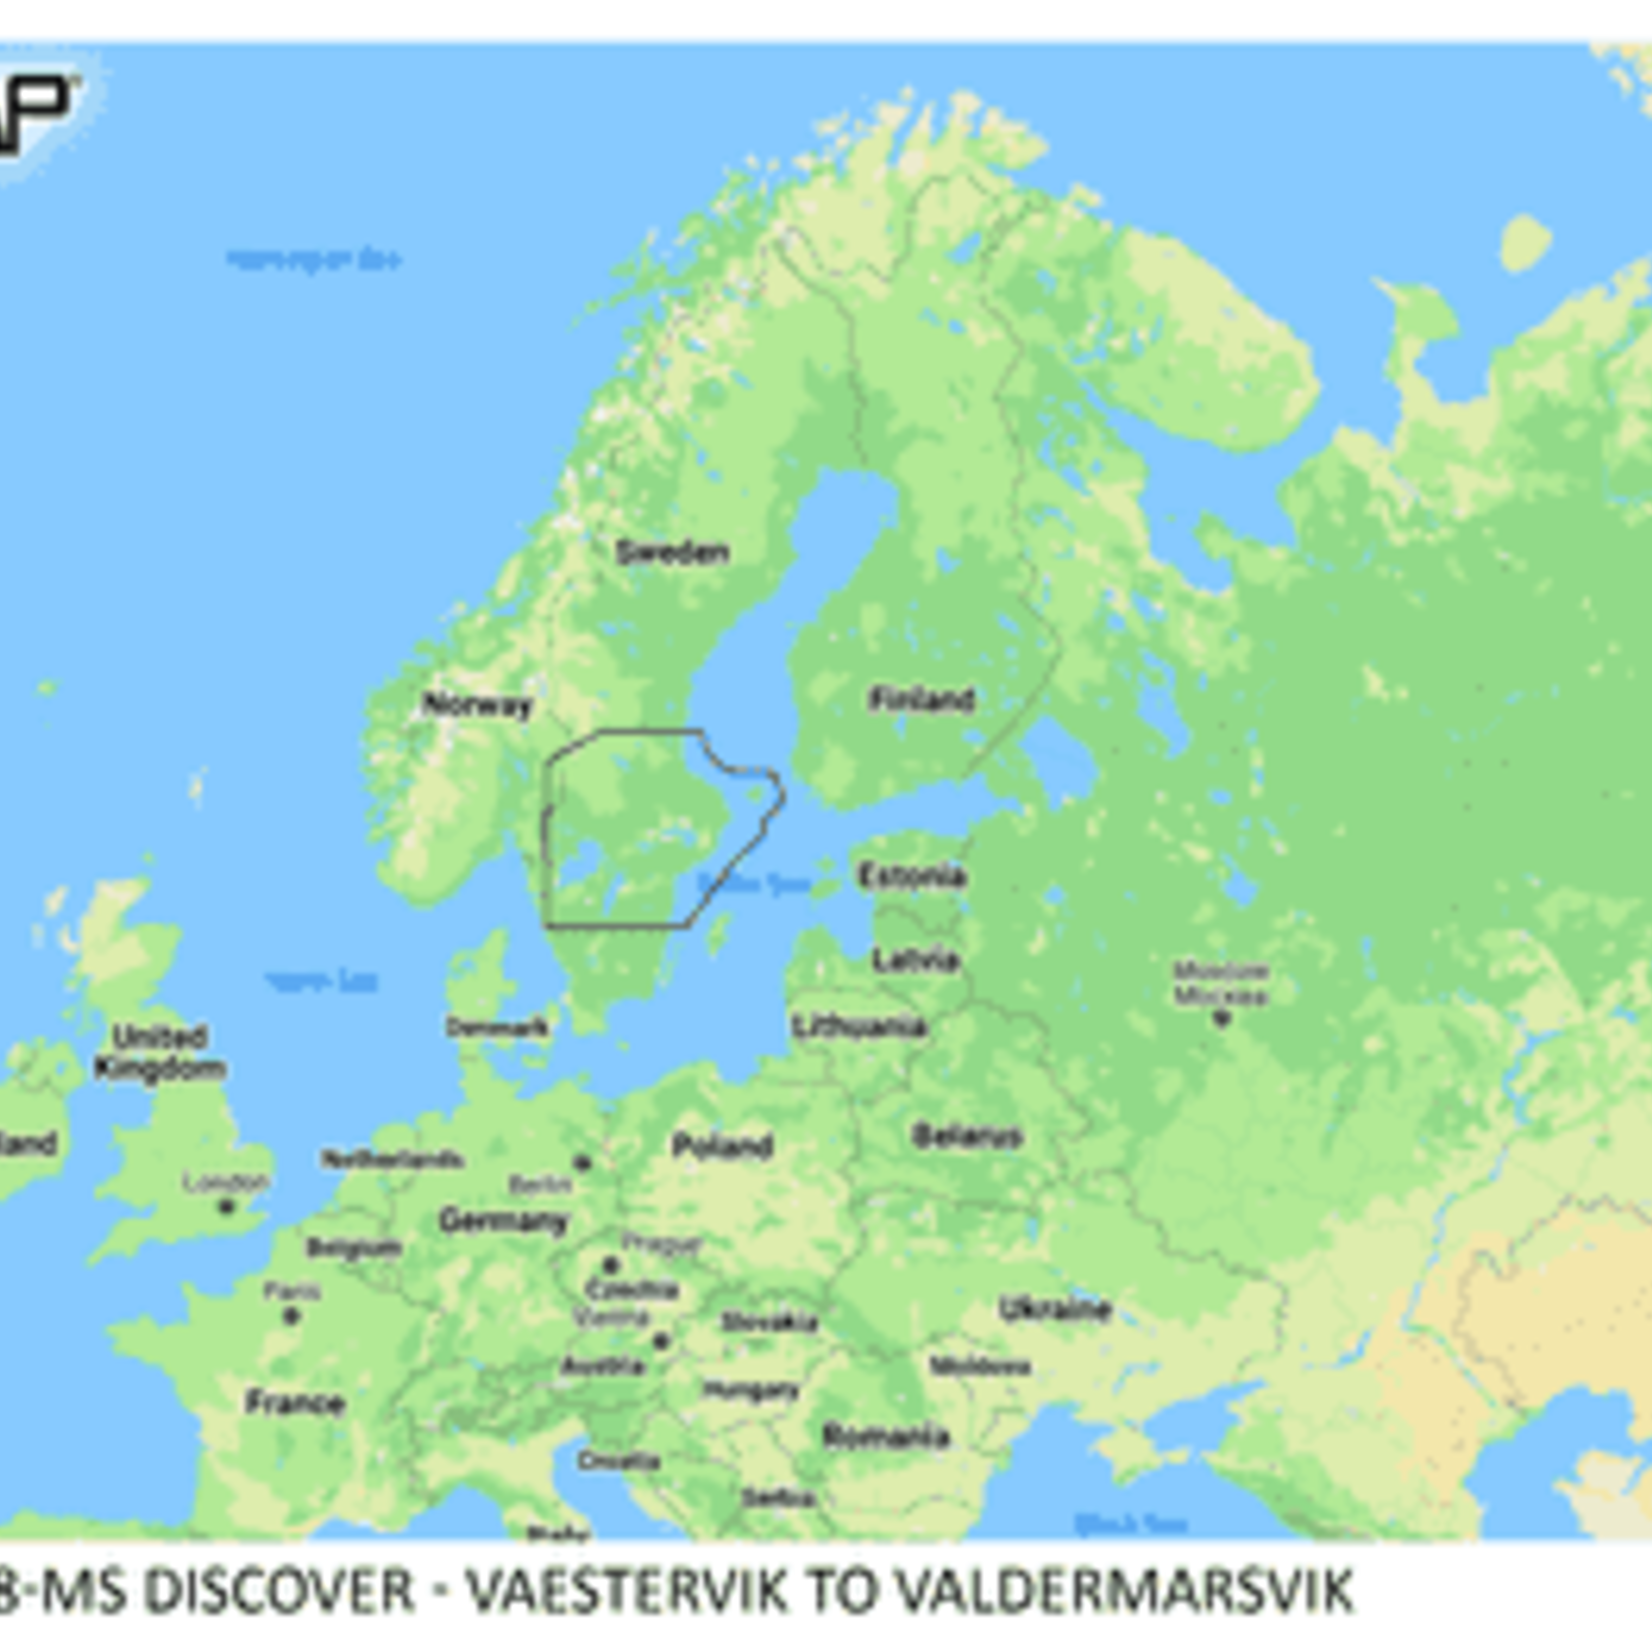 C-MAP DISCOVER - Västervik to Valdermarsvik